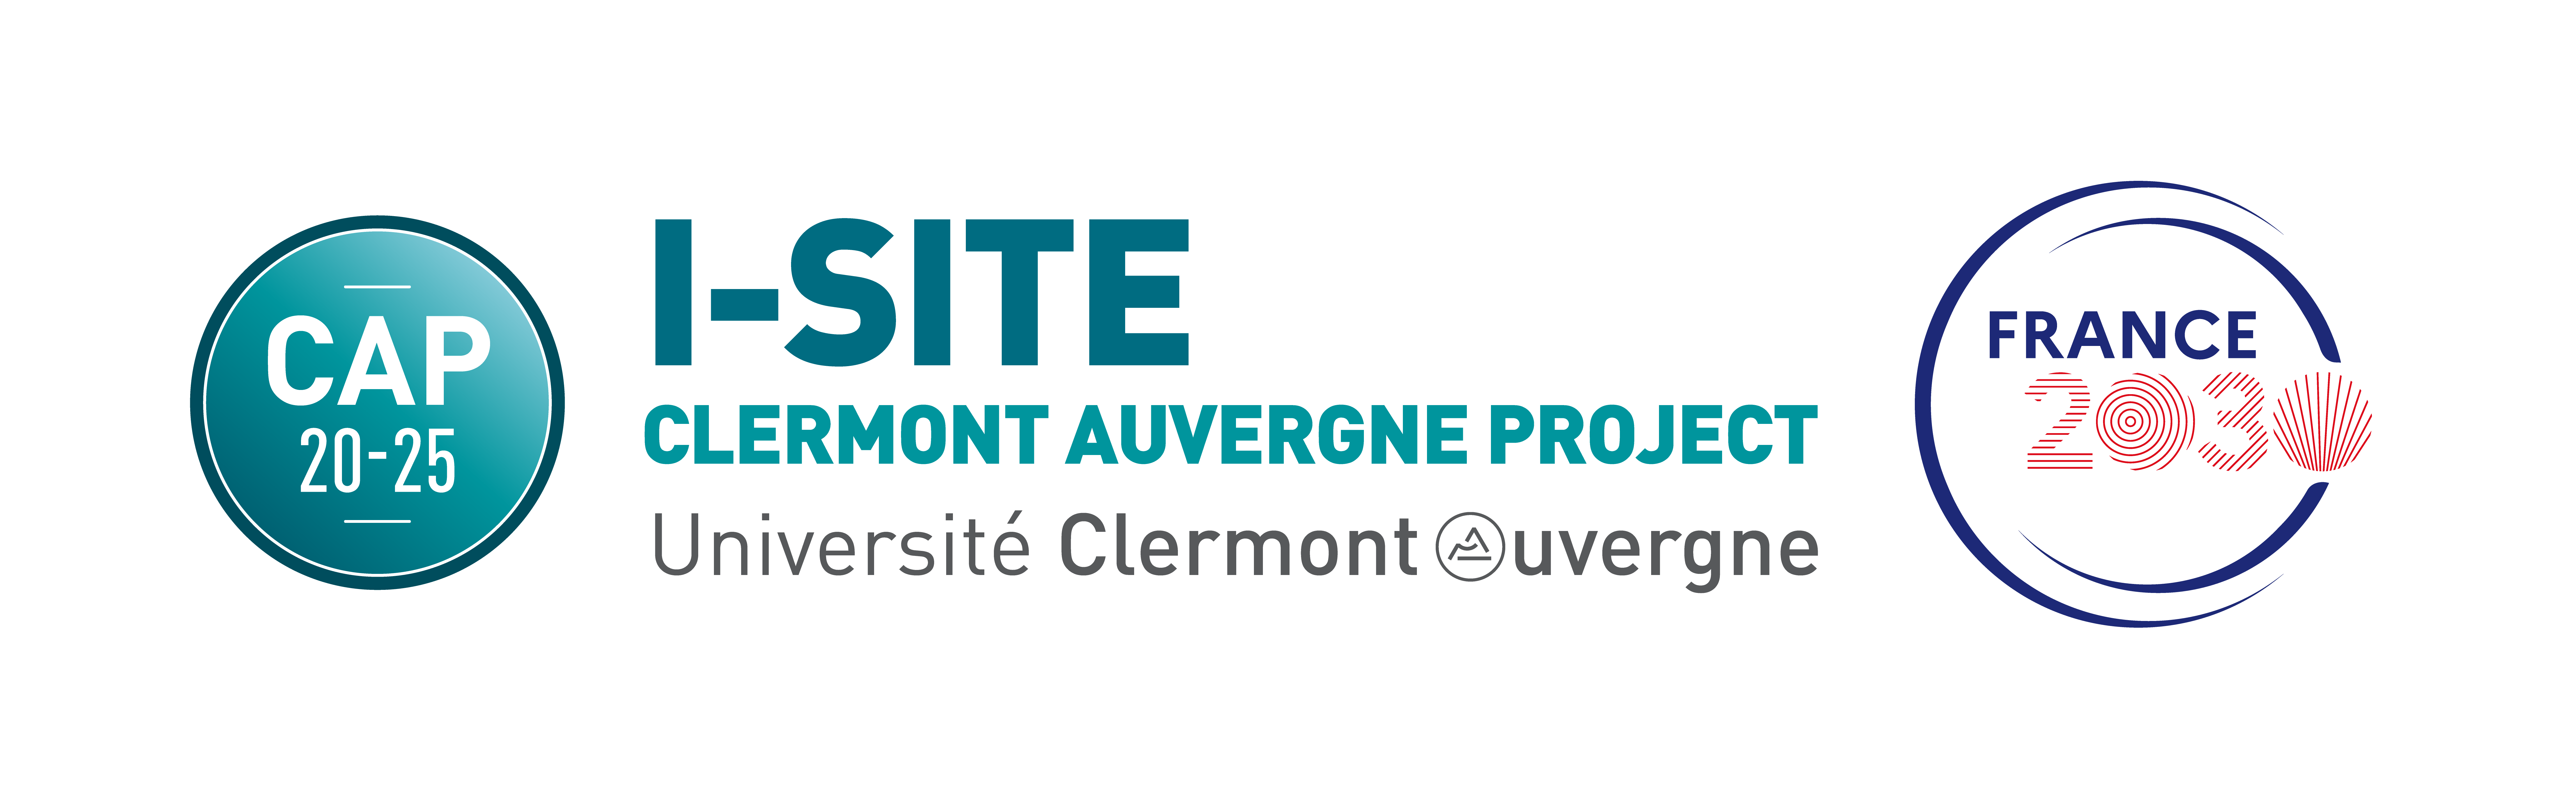 I-SITE Clermont Auvergne Project